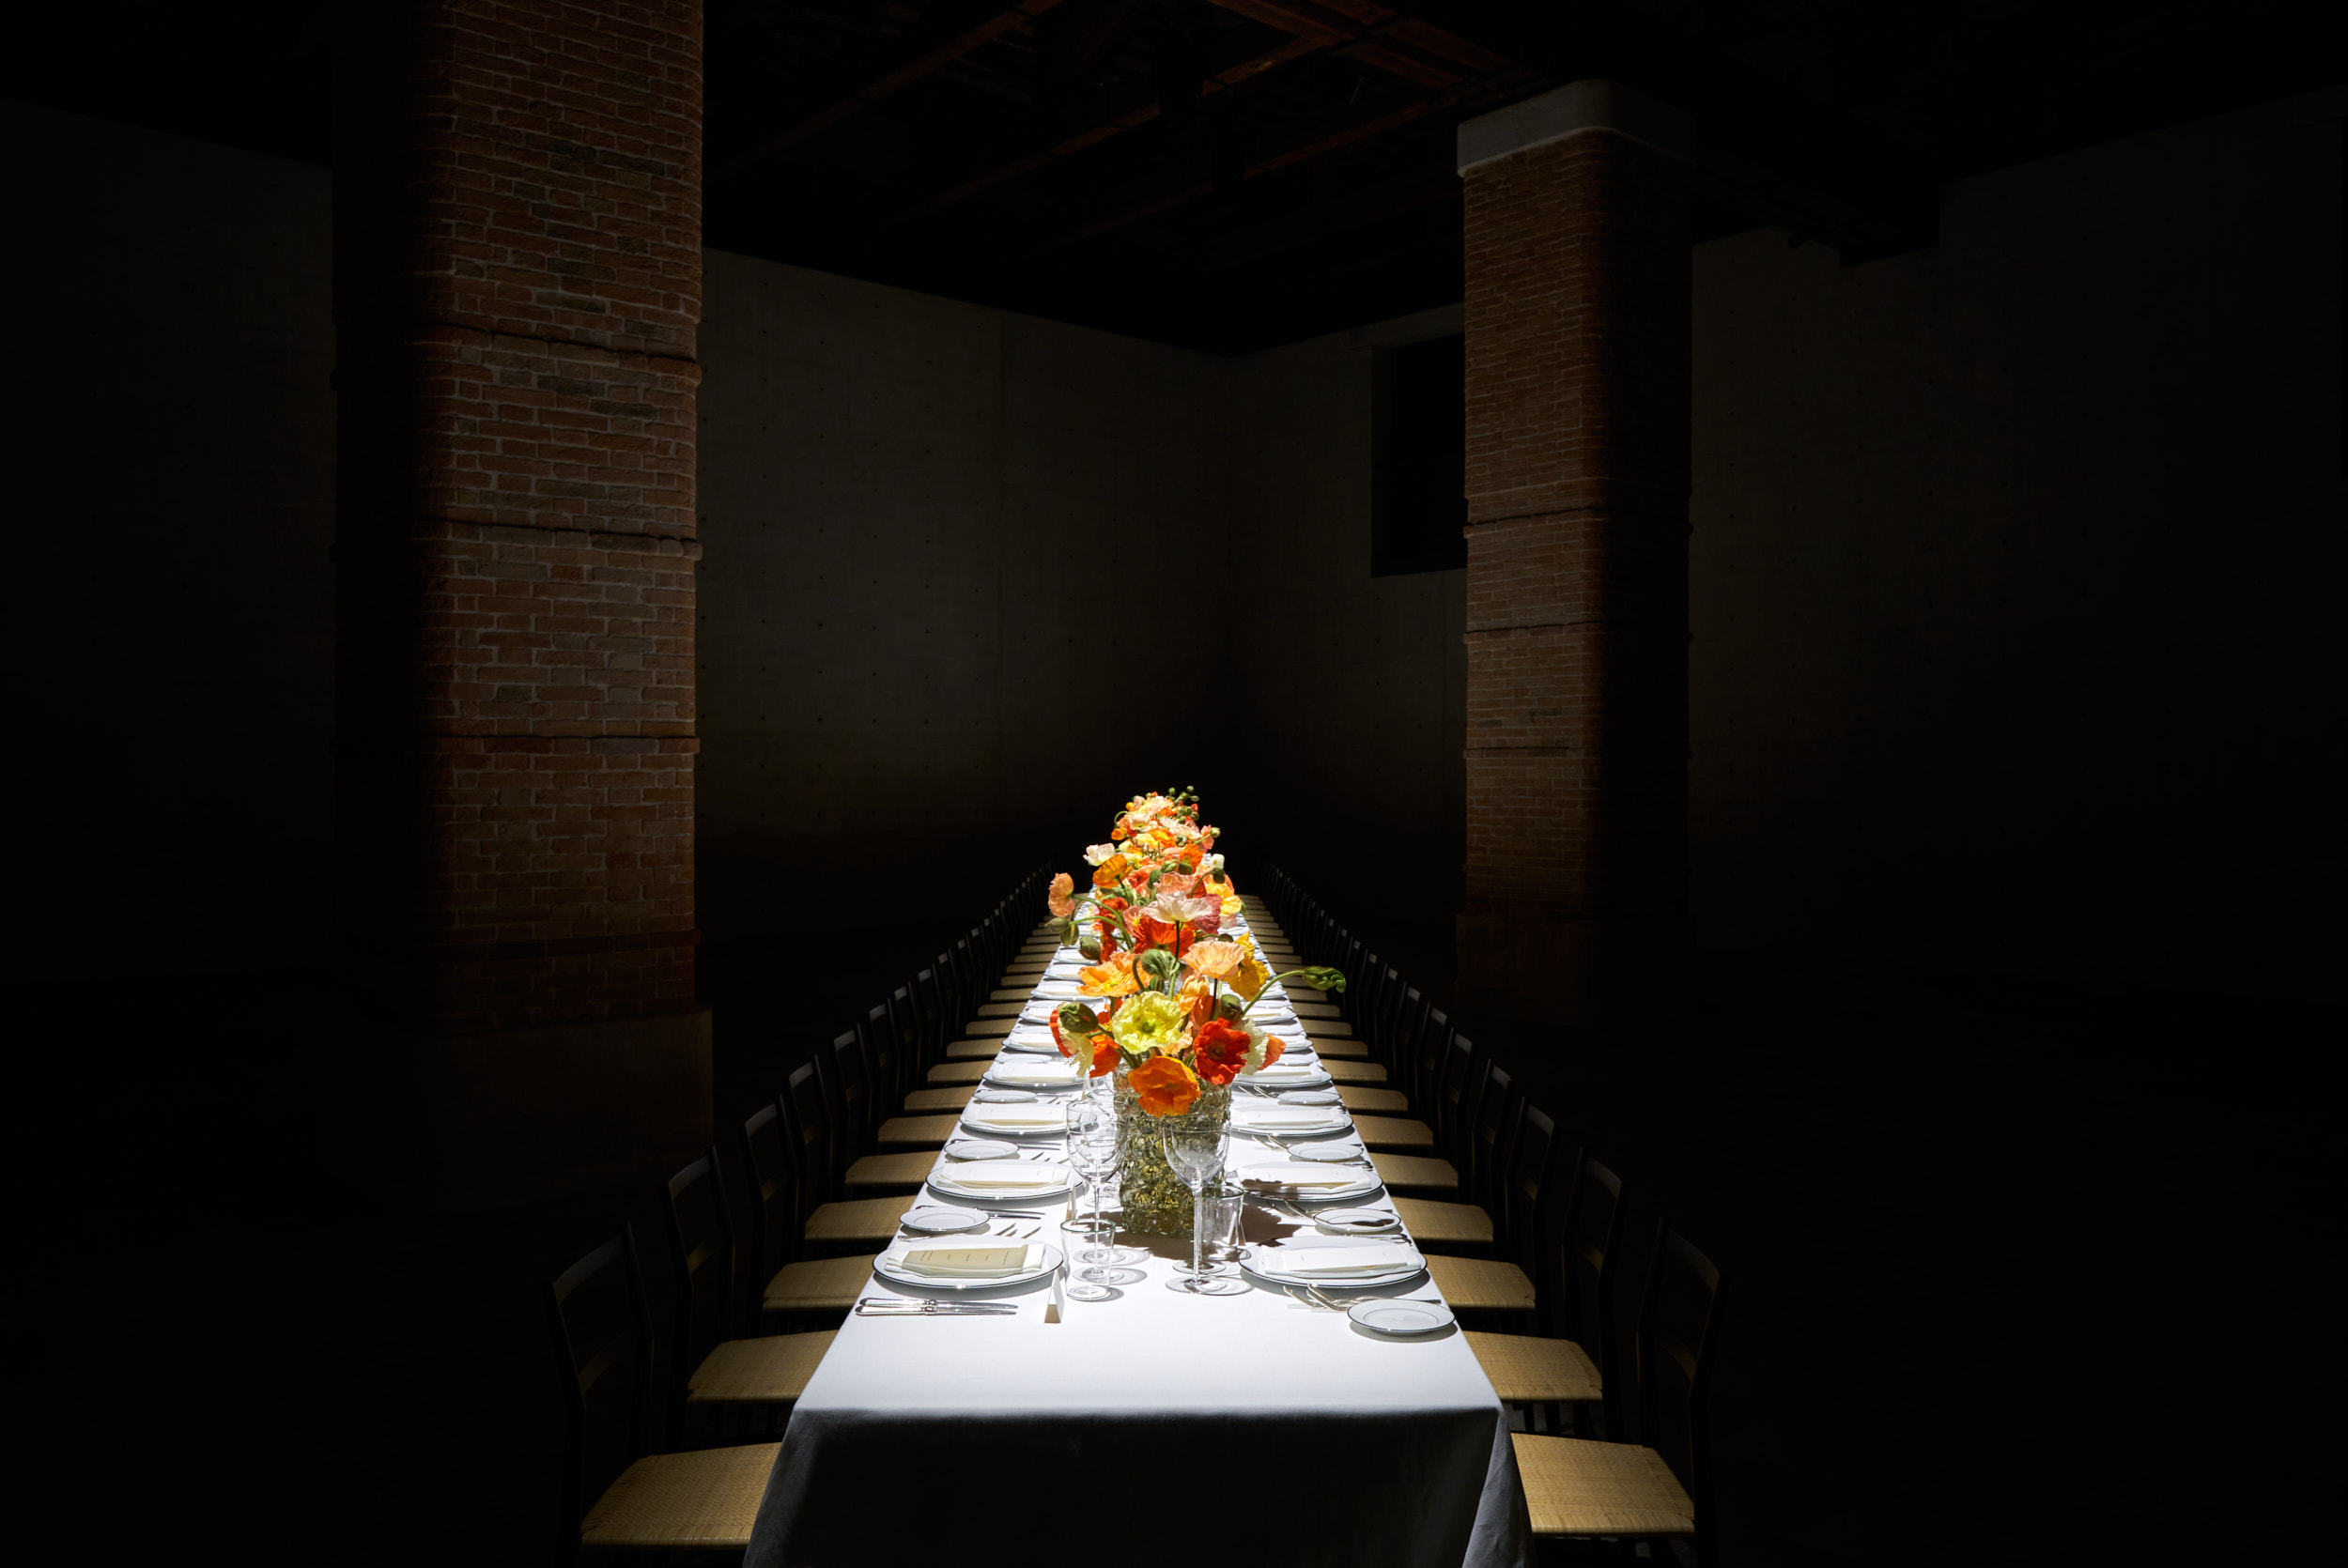 Bottega Veneta - Venice Biennale 2022 Dinner